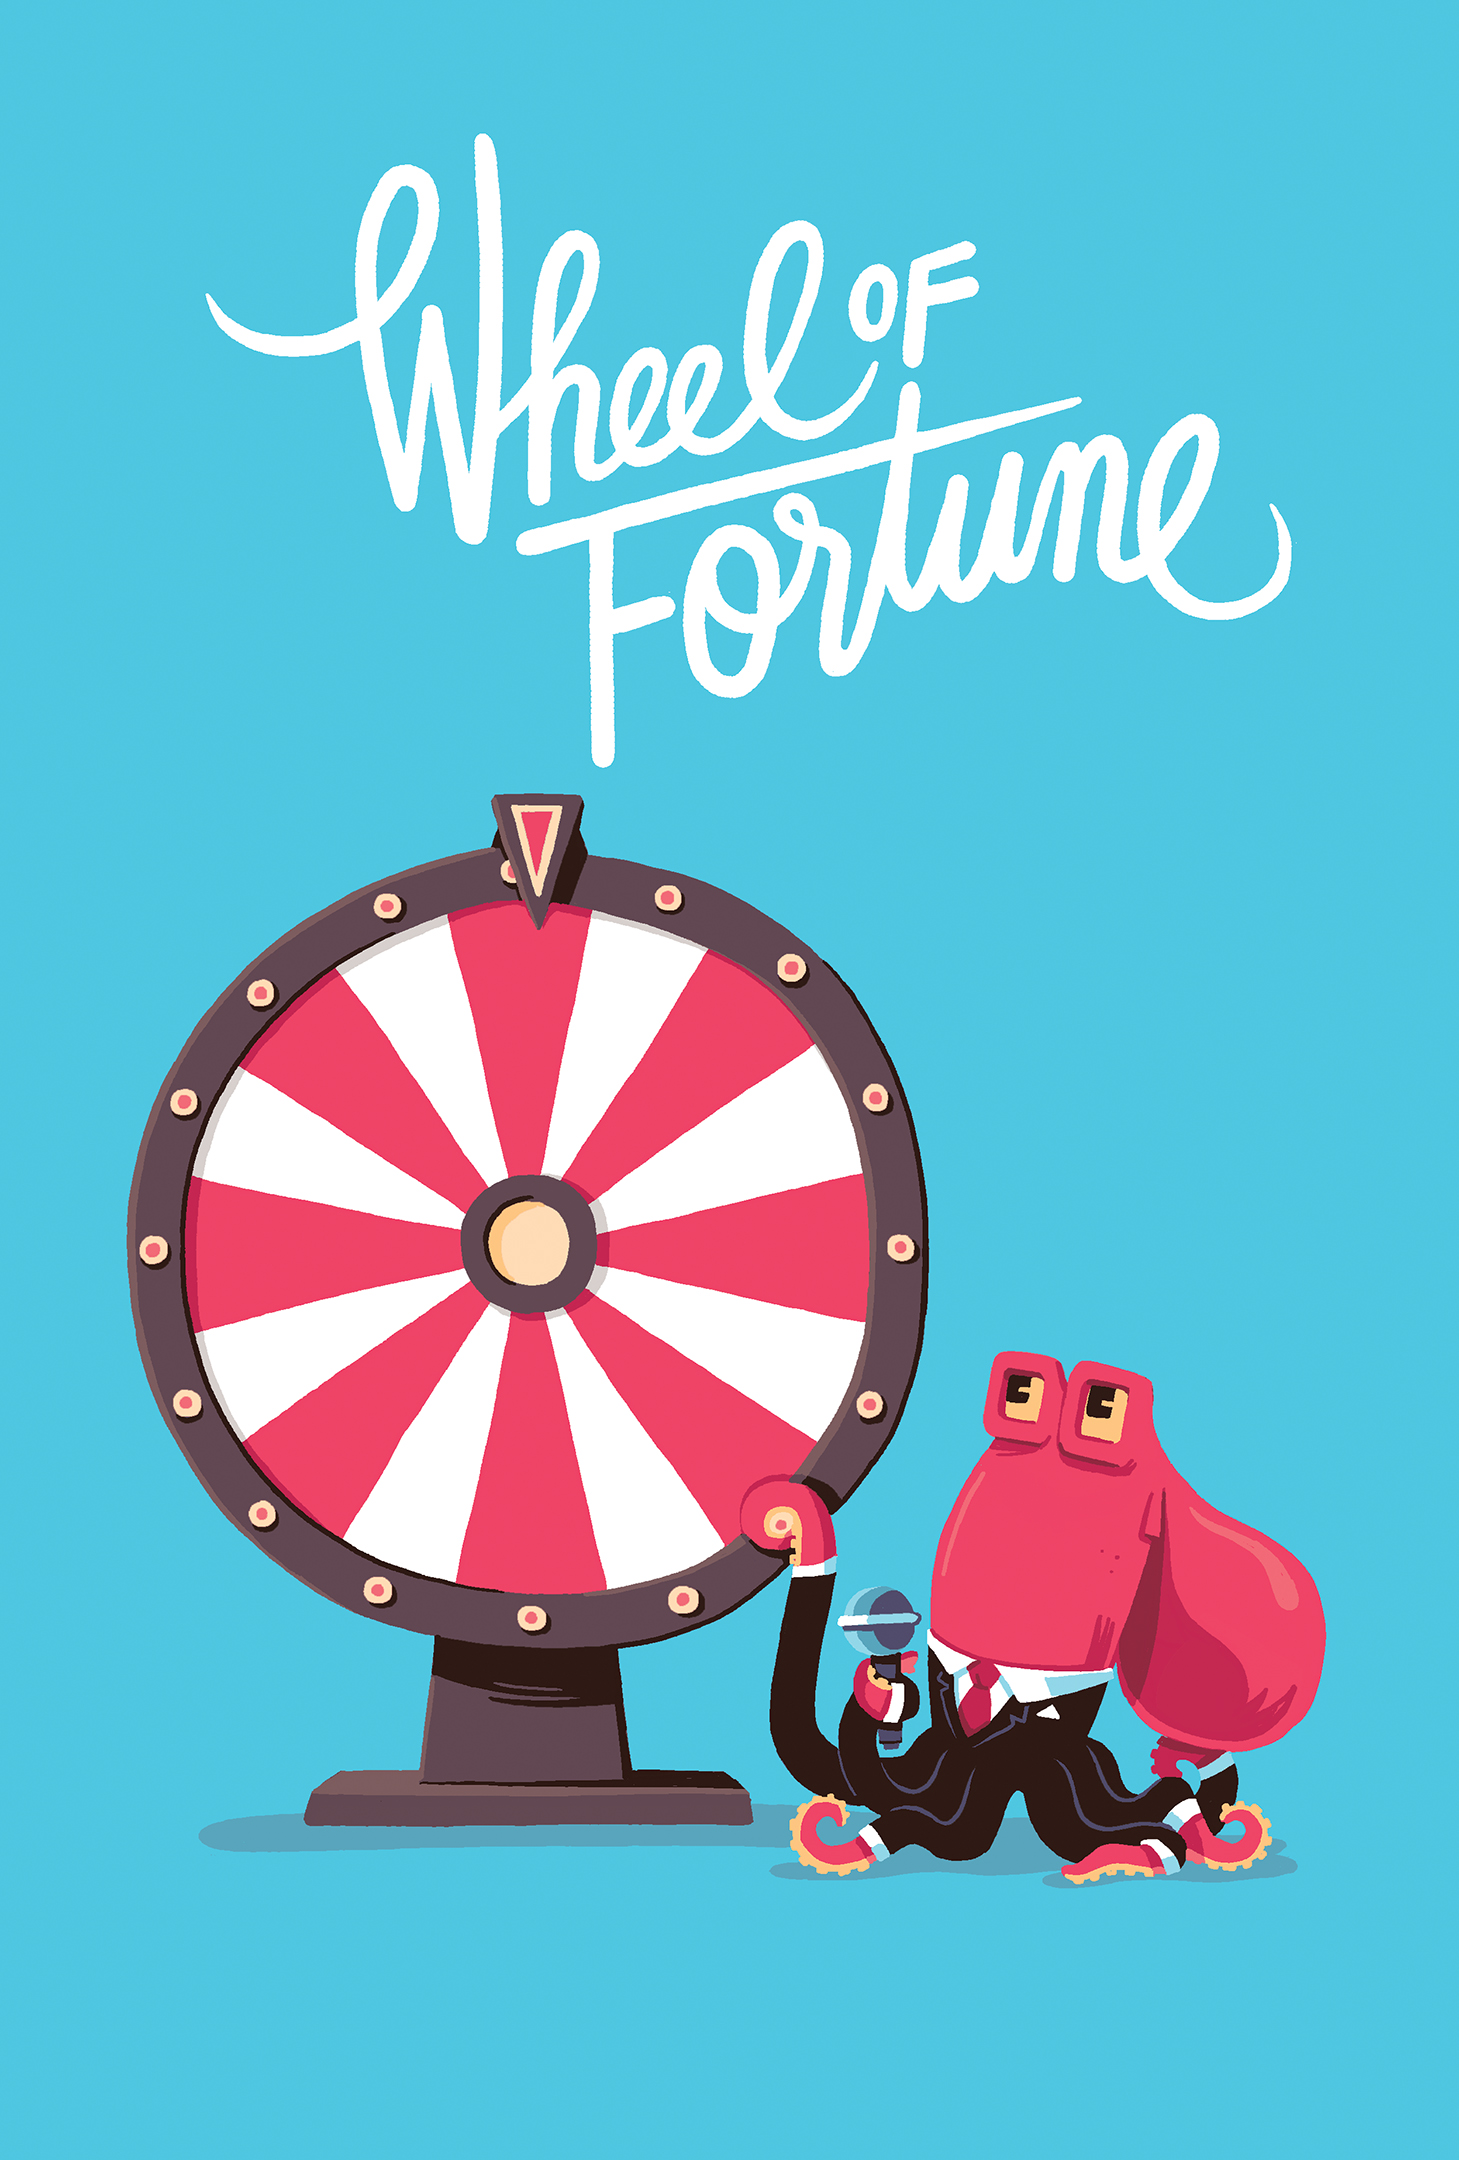 Wheel of Fortune Antipattern